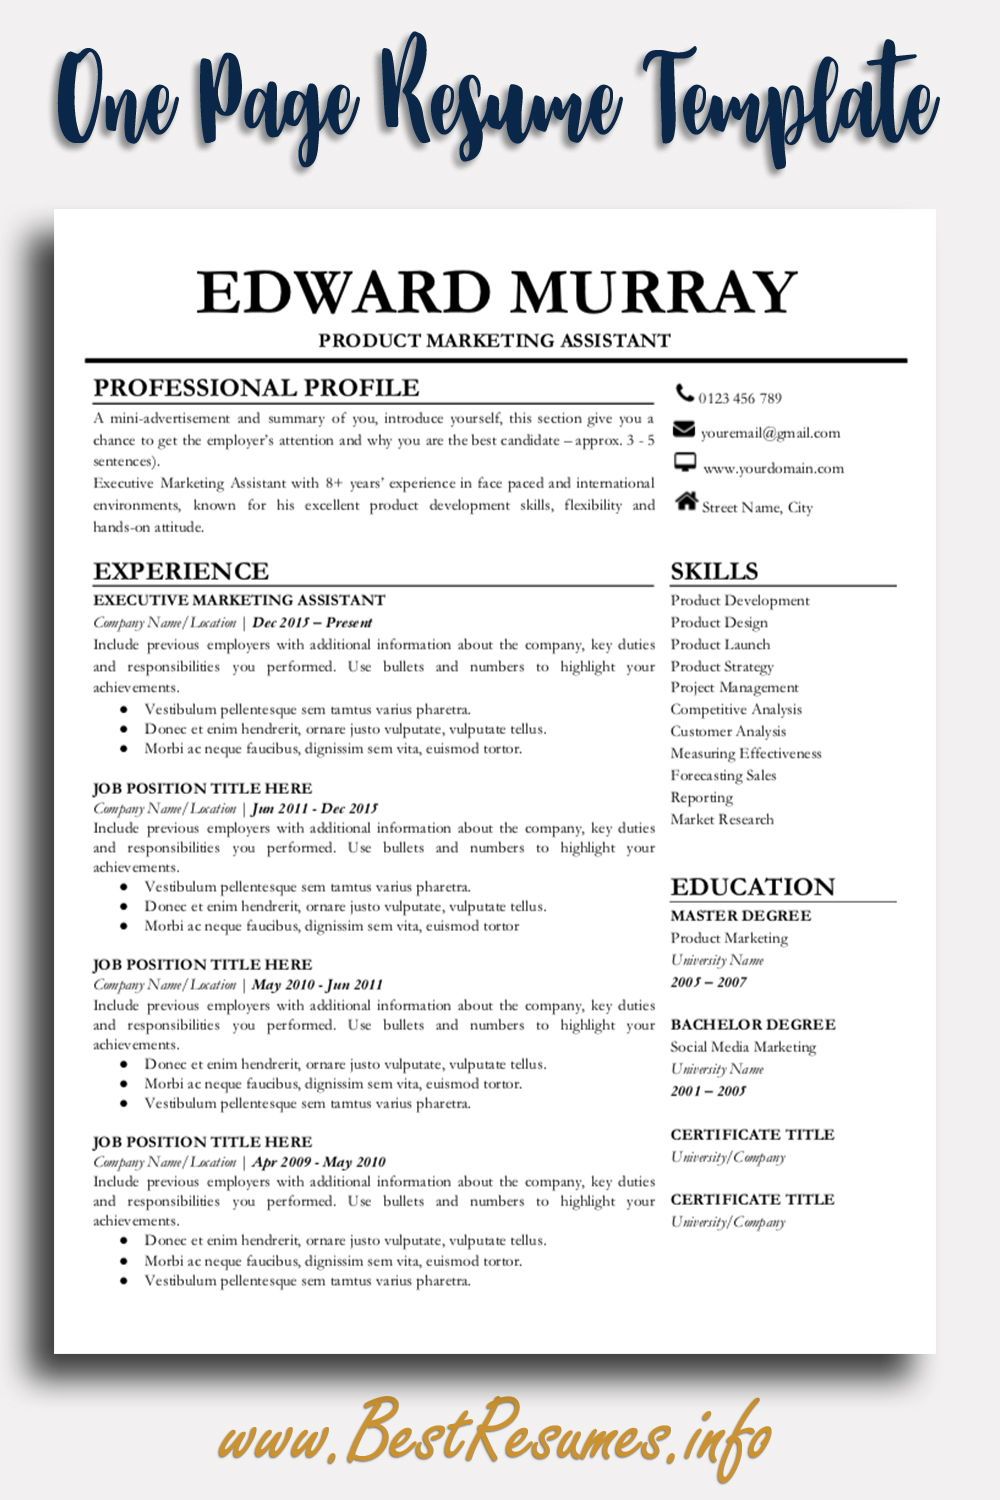 Best Teacher Resume Templates Of Professional Resume Template Edward ...